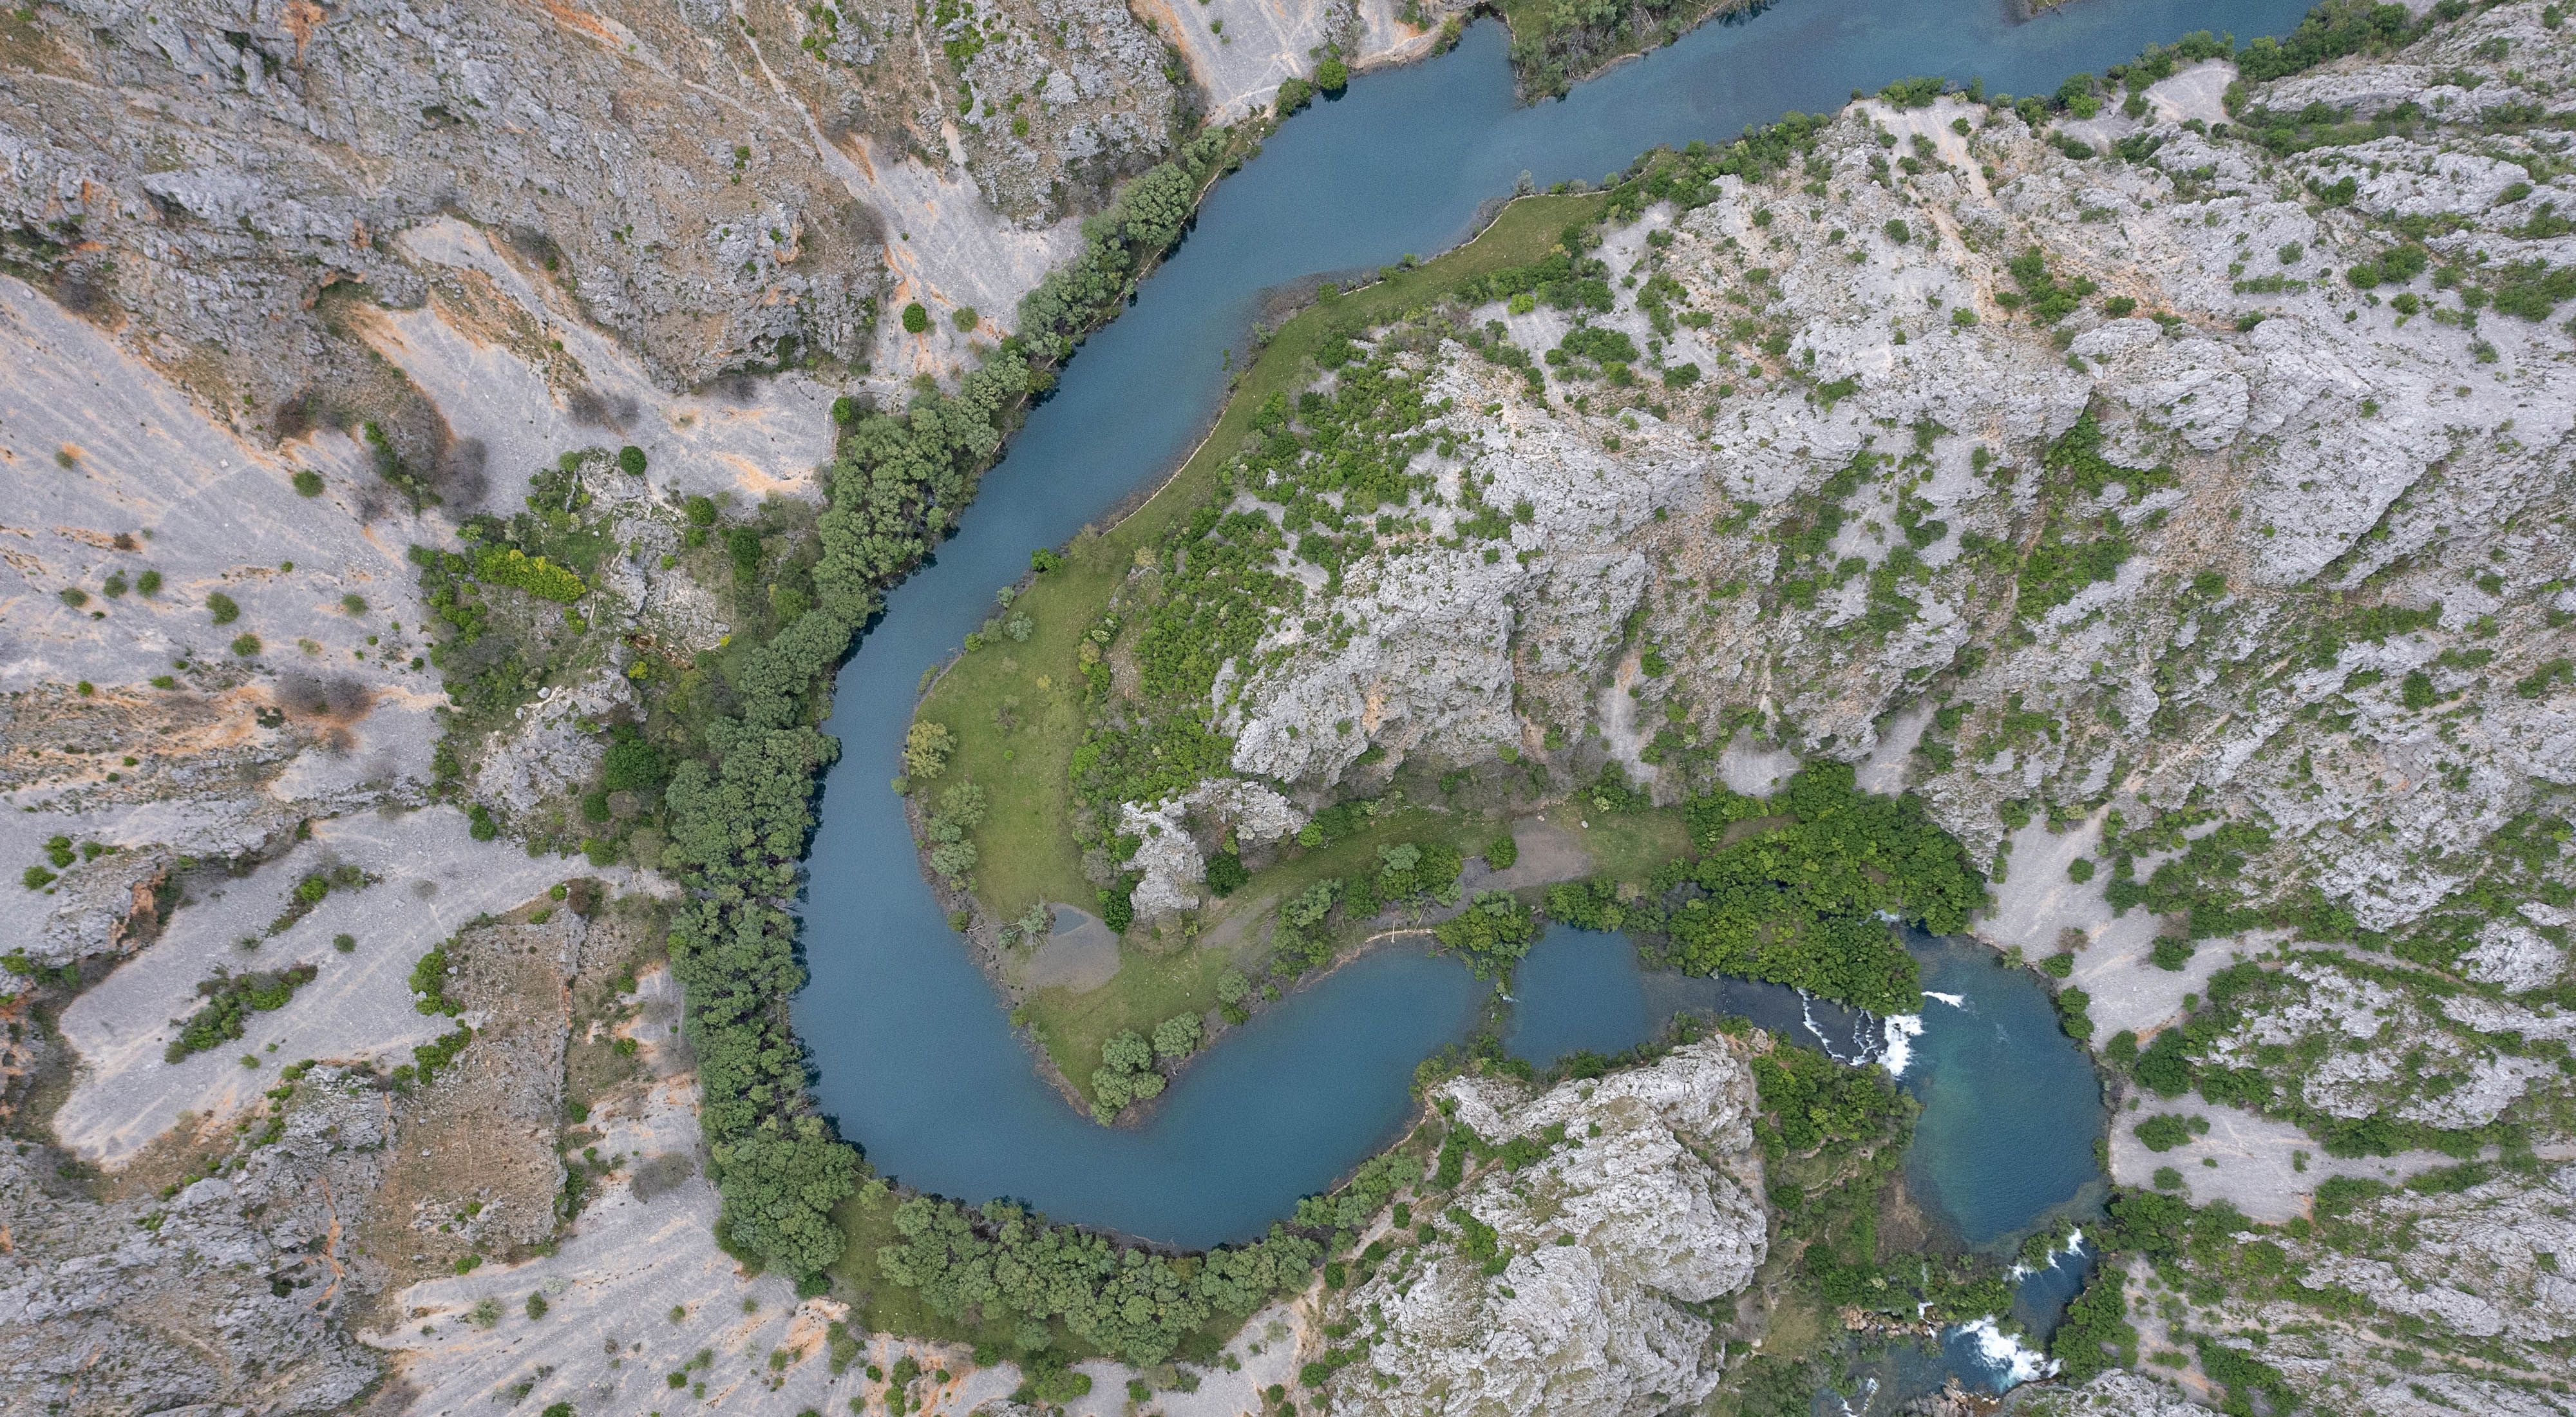 The Krupa river cuts a serpentine path through Dalmatia, a region along the southern tip of Croatia